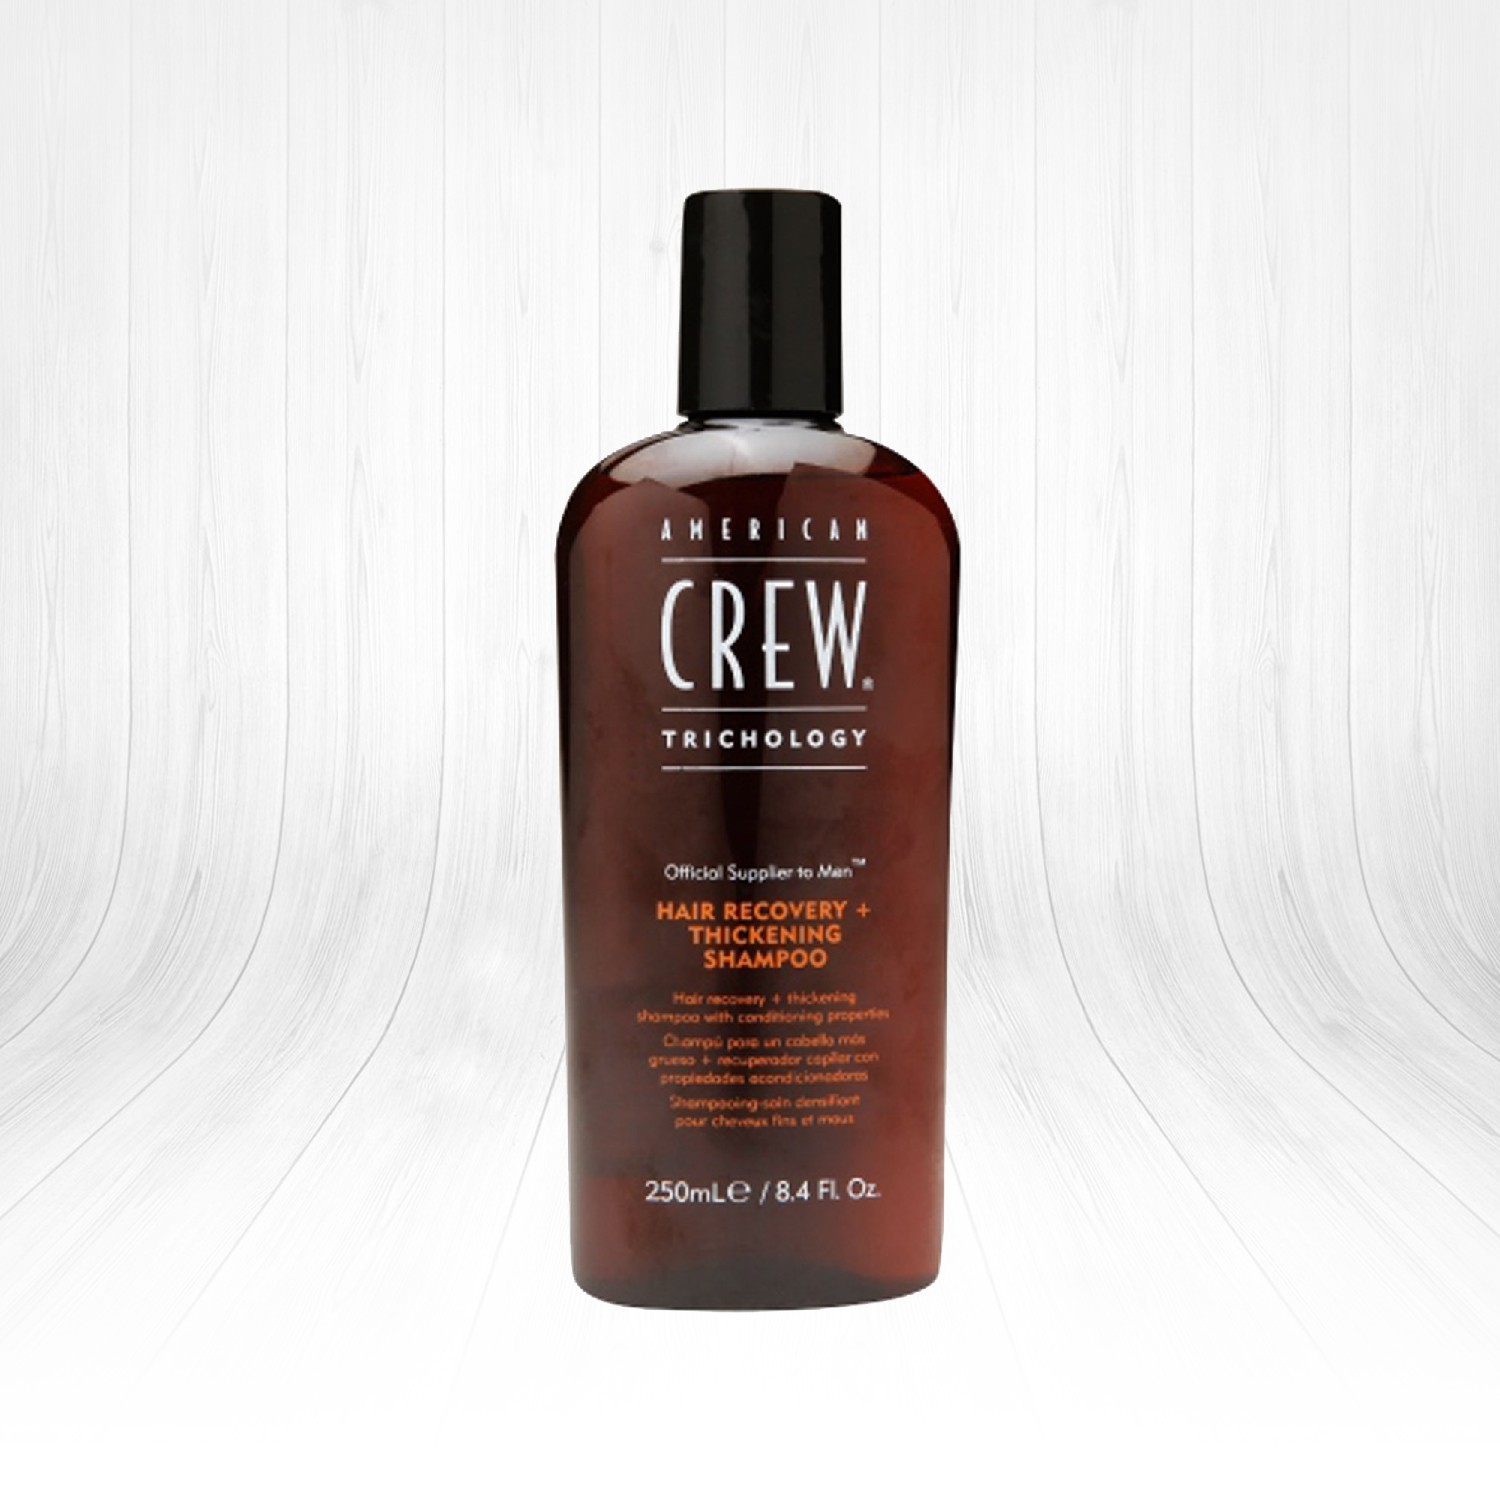 American Crew Hair Recovery Thickening Erkeklere Özel Haciendirici Şampuan